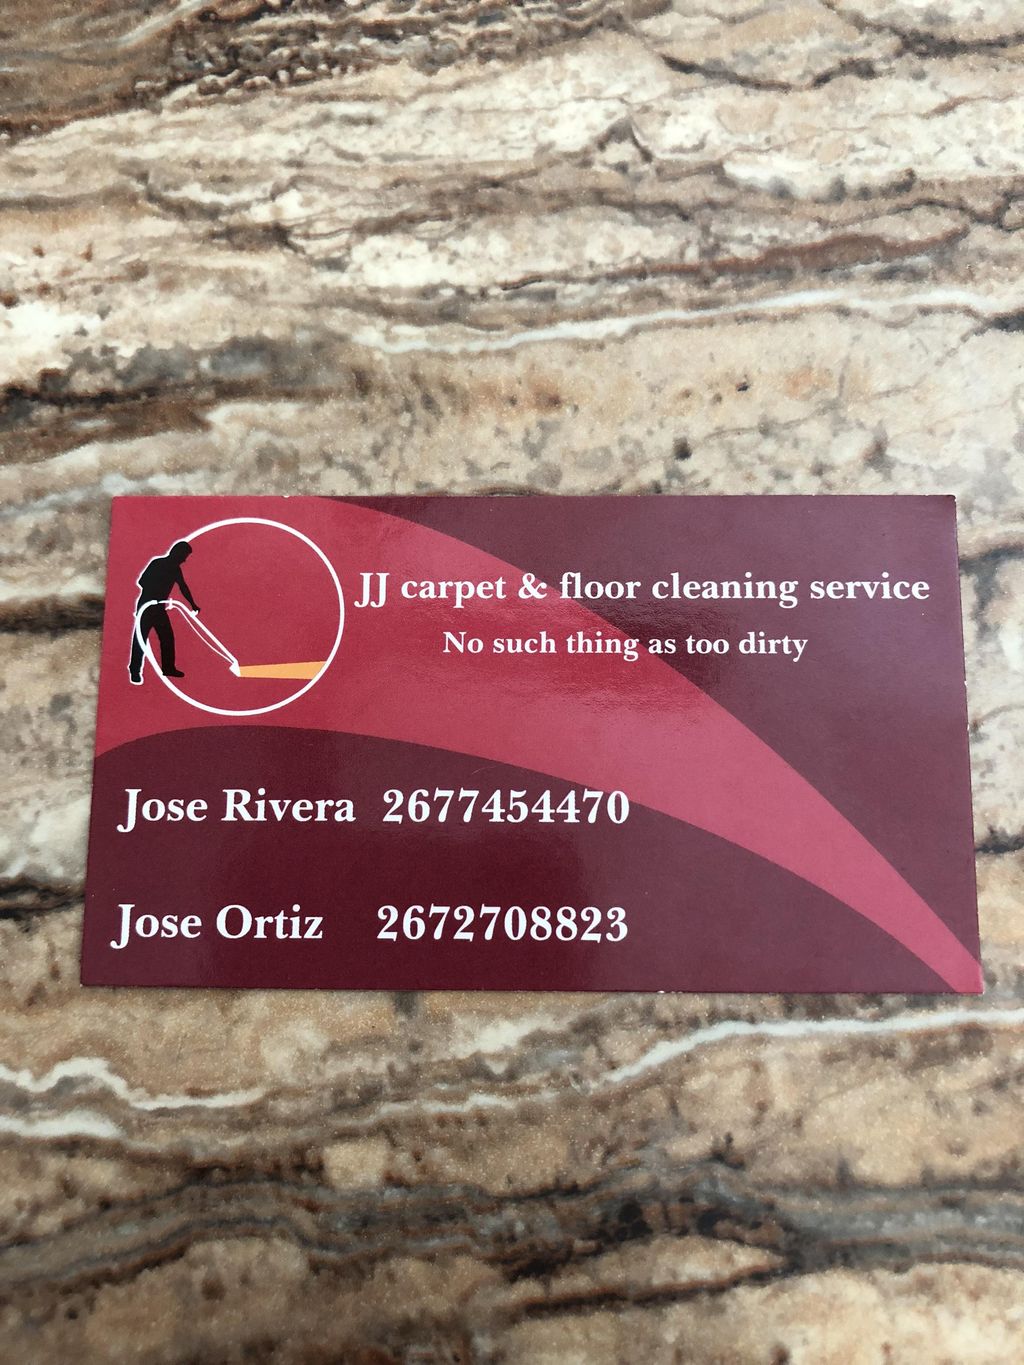 JJ Carpet & Floor Cleaning Service